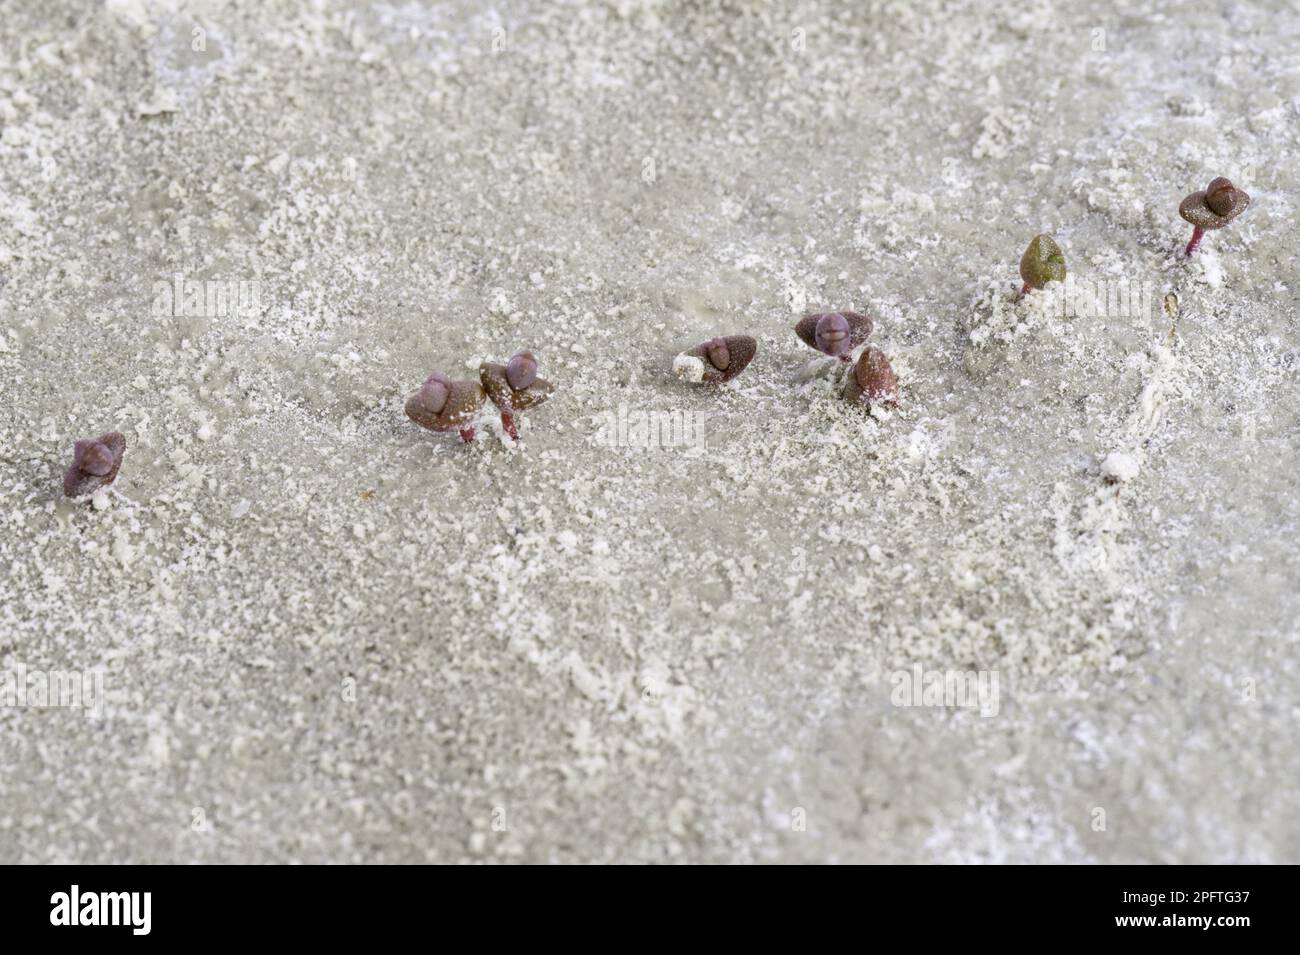 Perennial glasswort seedlings (Sarcocornia perennis) coming from the saline, Santa Cruz Province, Patagonia, Argentina Stock Photo